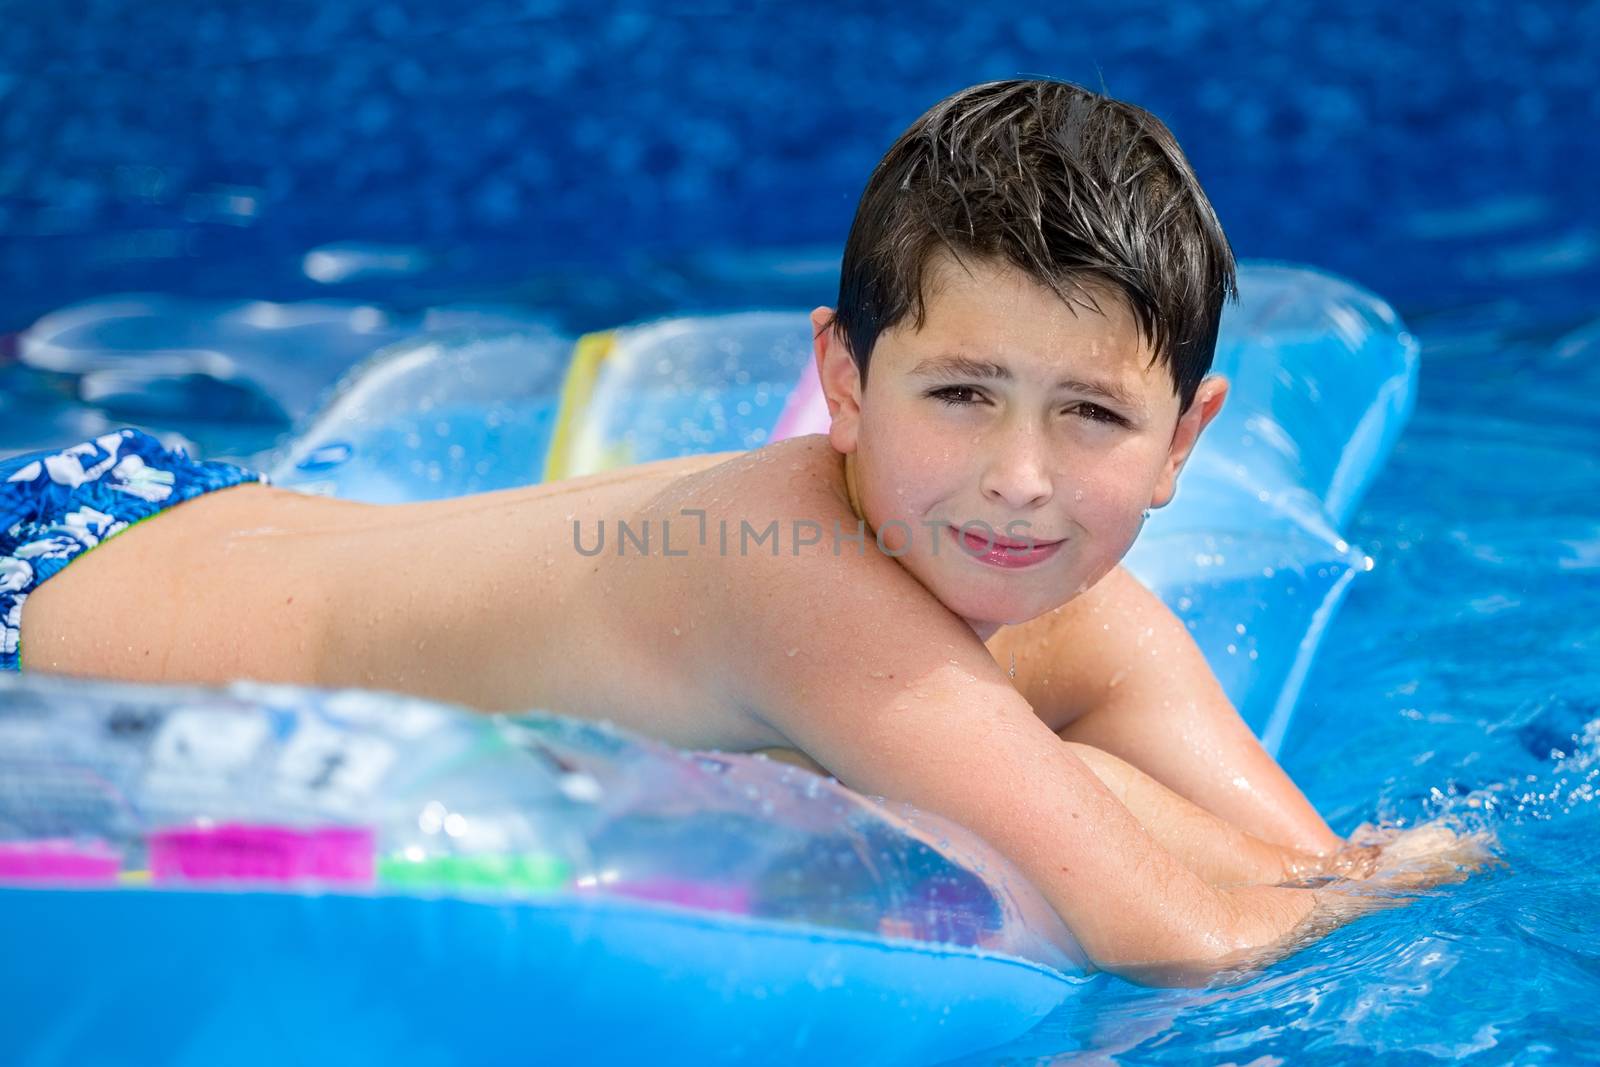 Boy in swimming pool  by artush